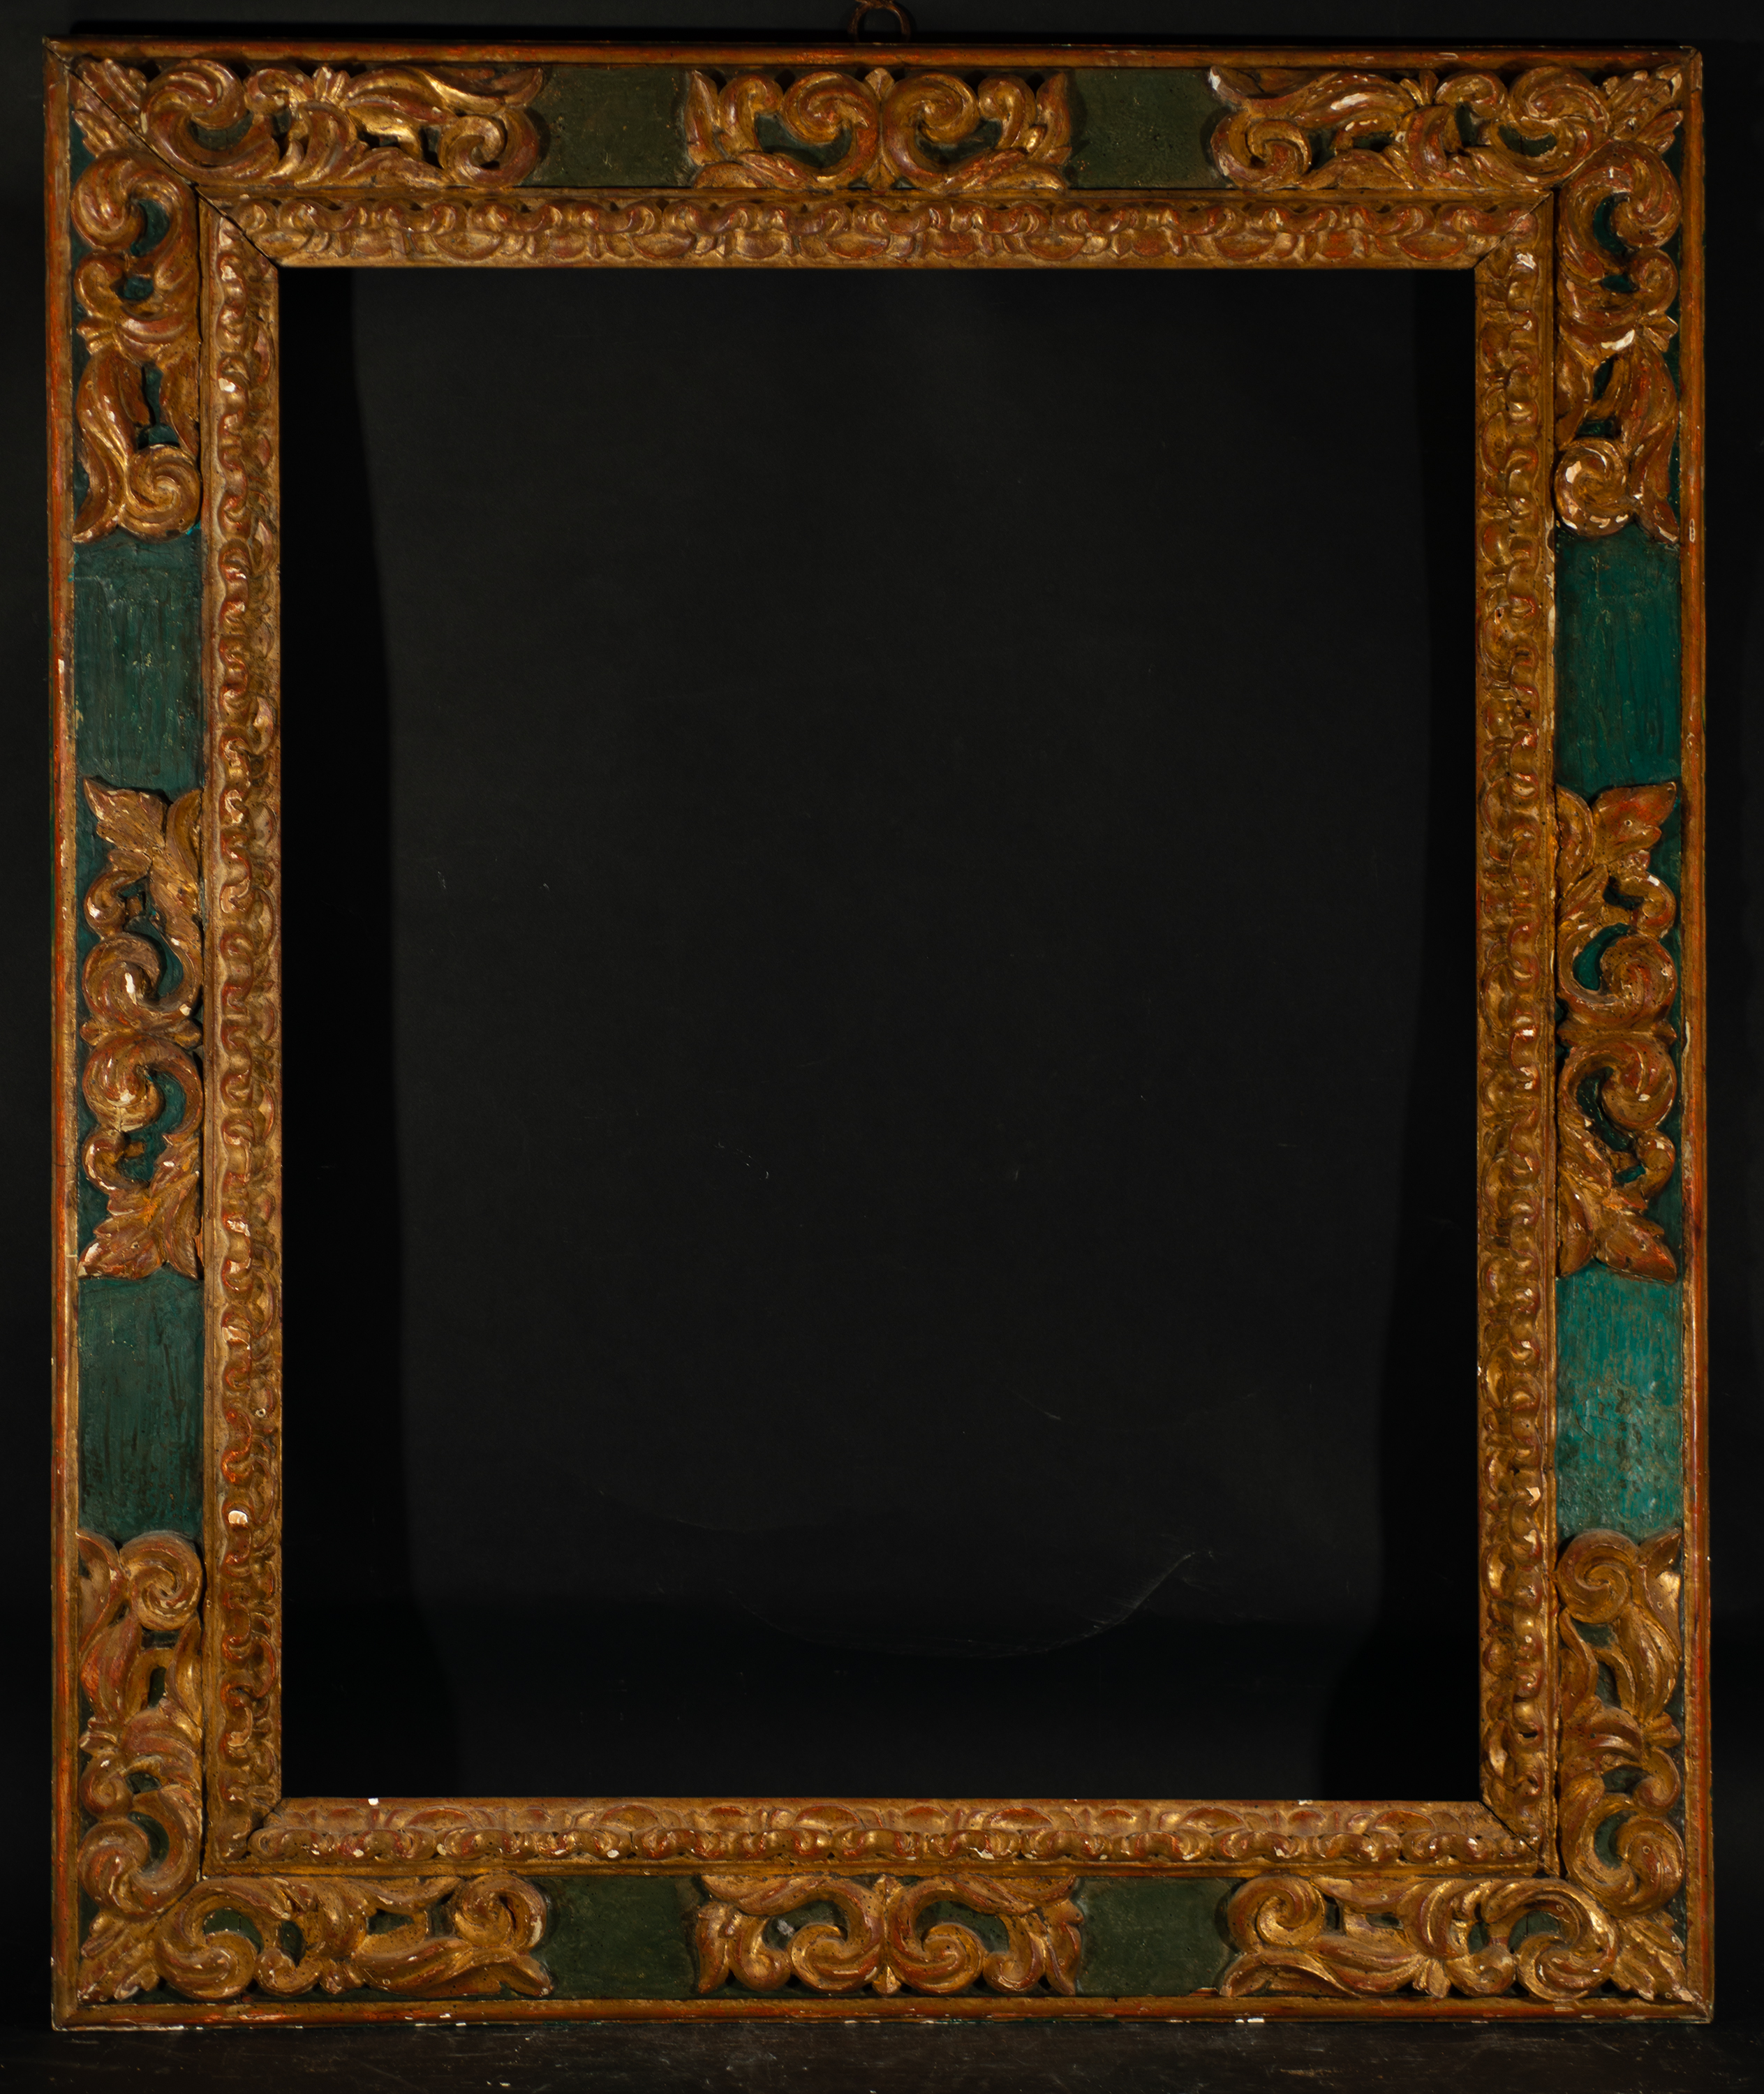 Important Spanish Baroque frame, 17th century